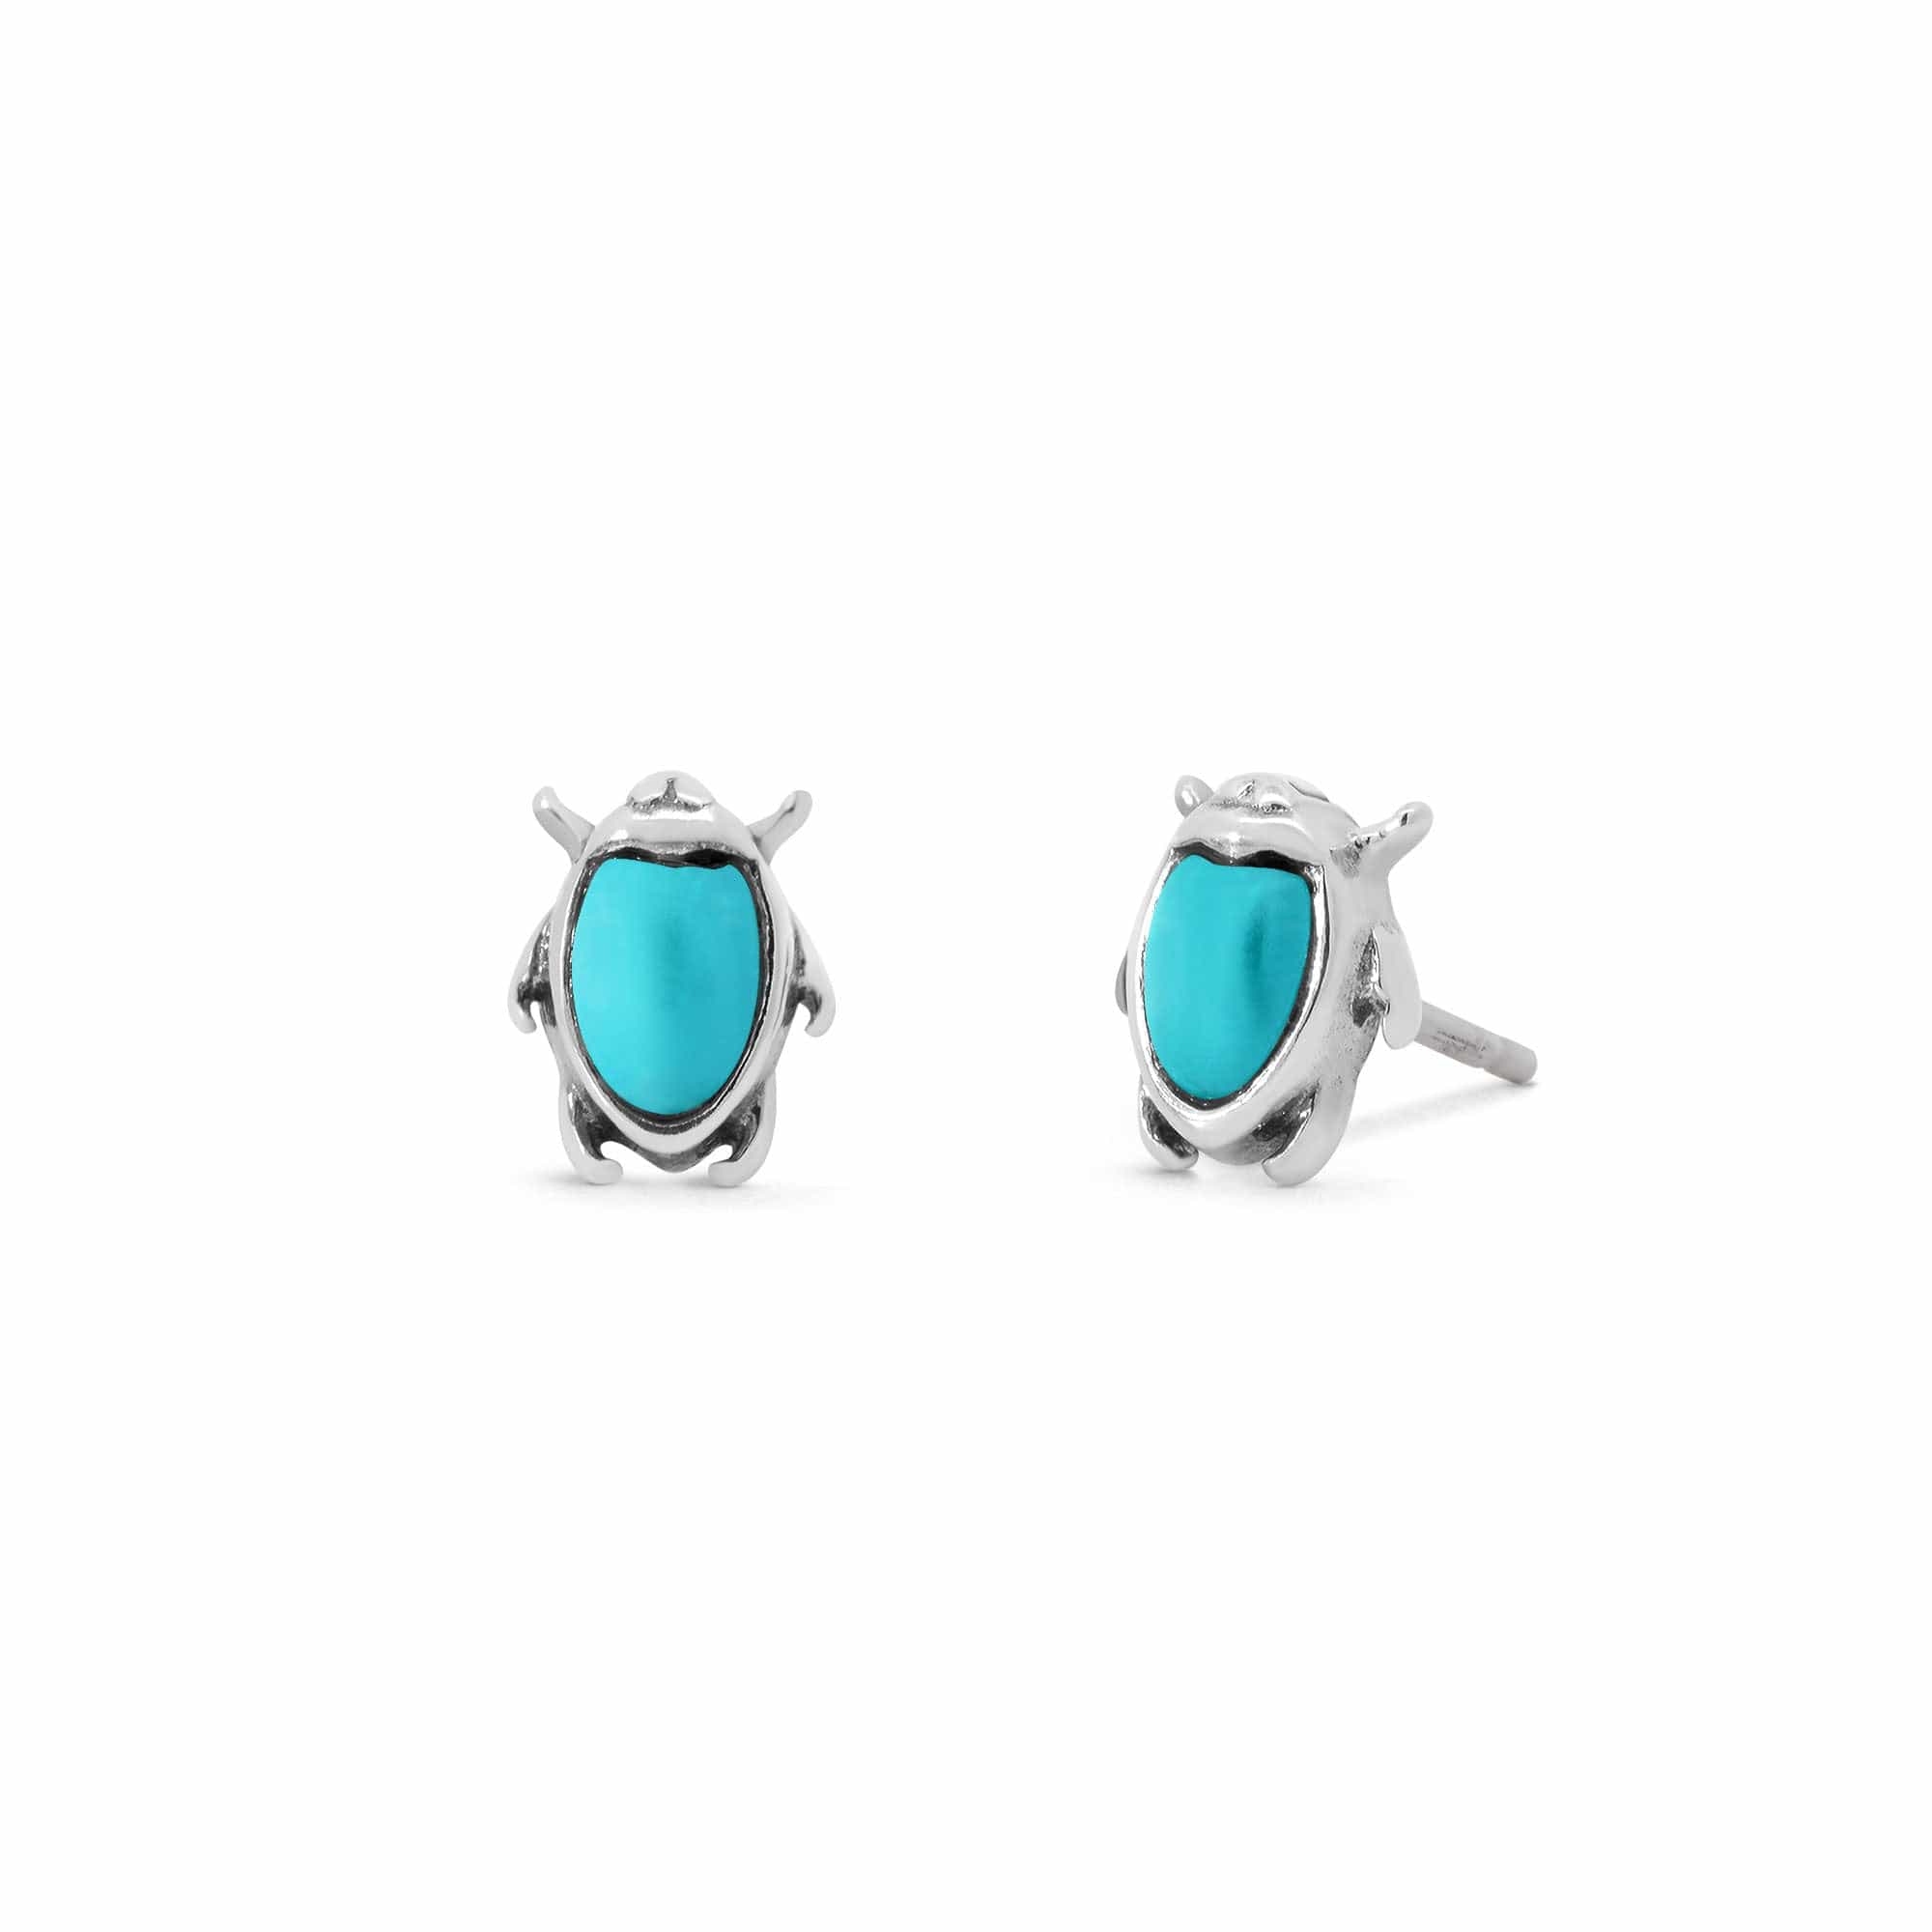 Boma Jewelry Earrings Turquoise Bug Stud Earrings with Stone